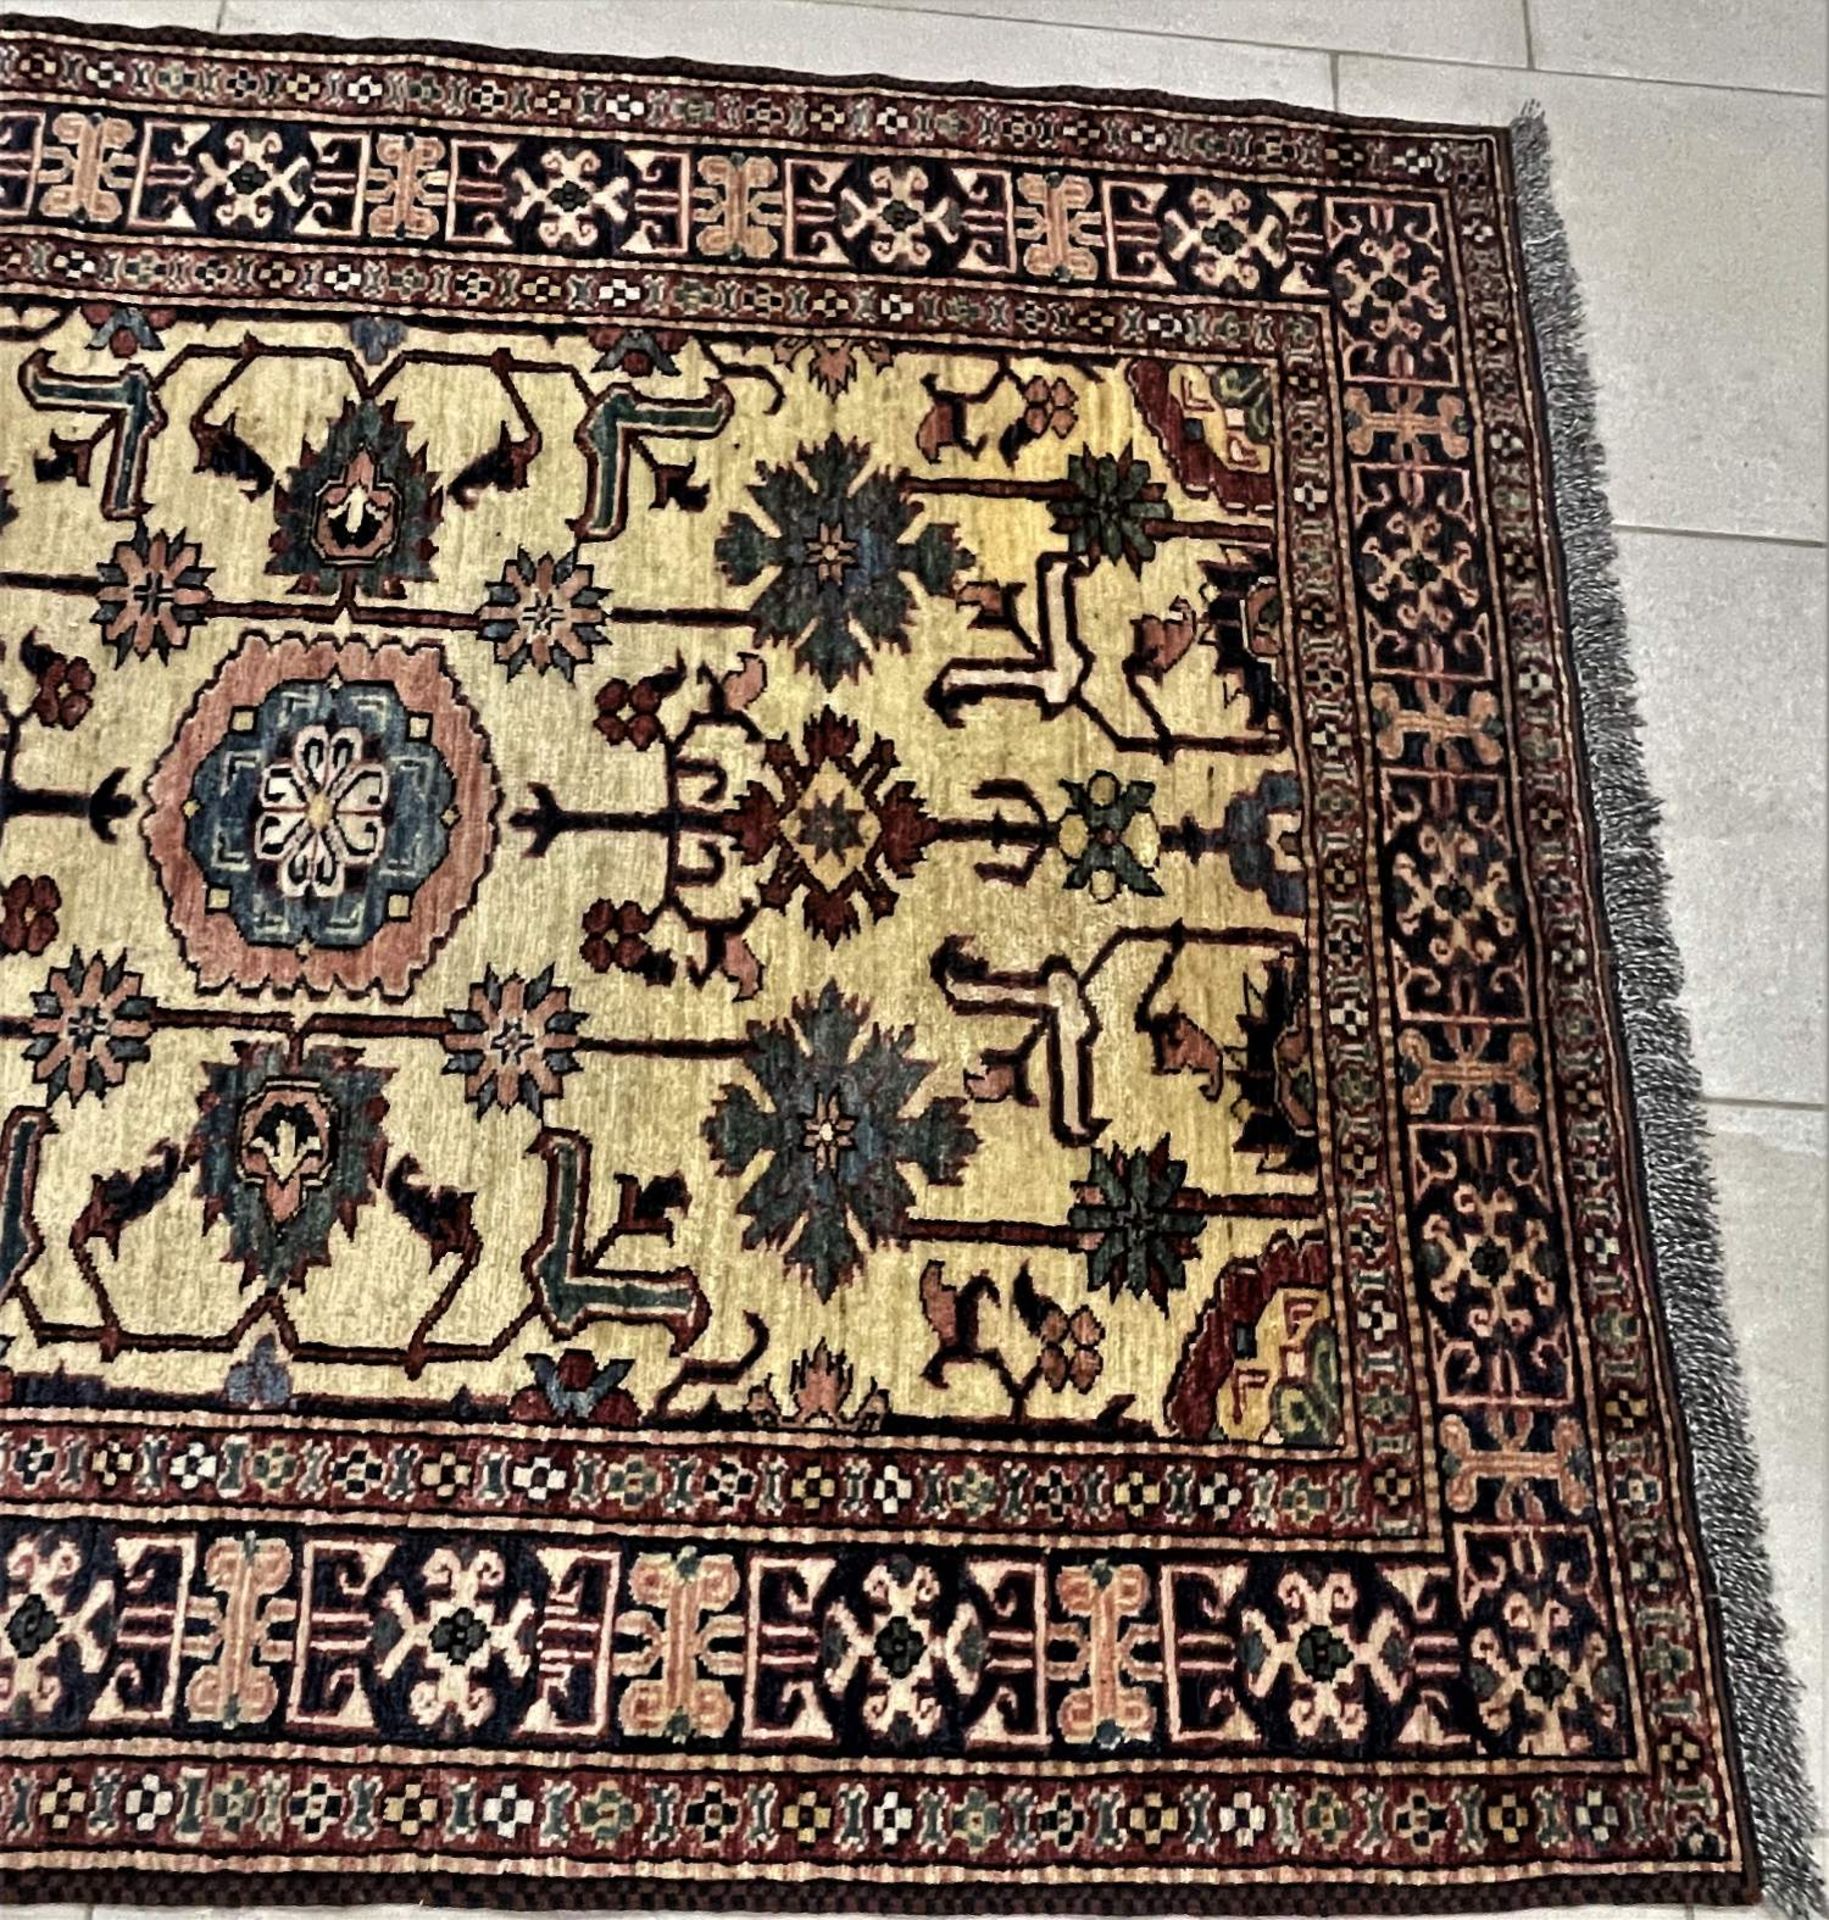 Oriental rug from Pakistan "Afghan Kazzak" - 161 x 121 cm - Image 3 of 7